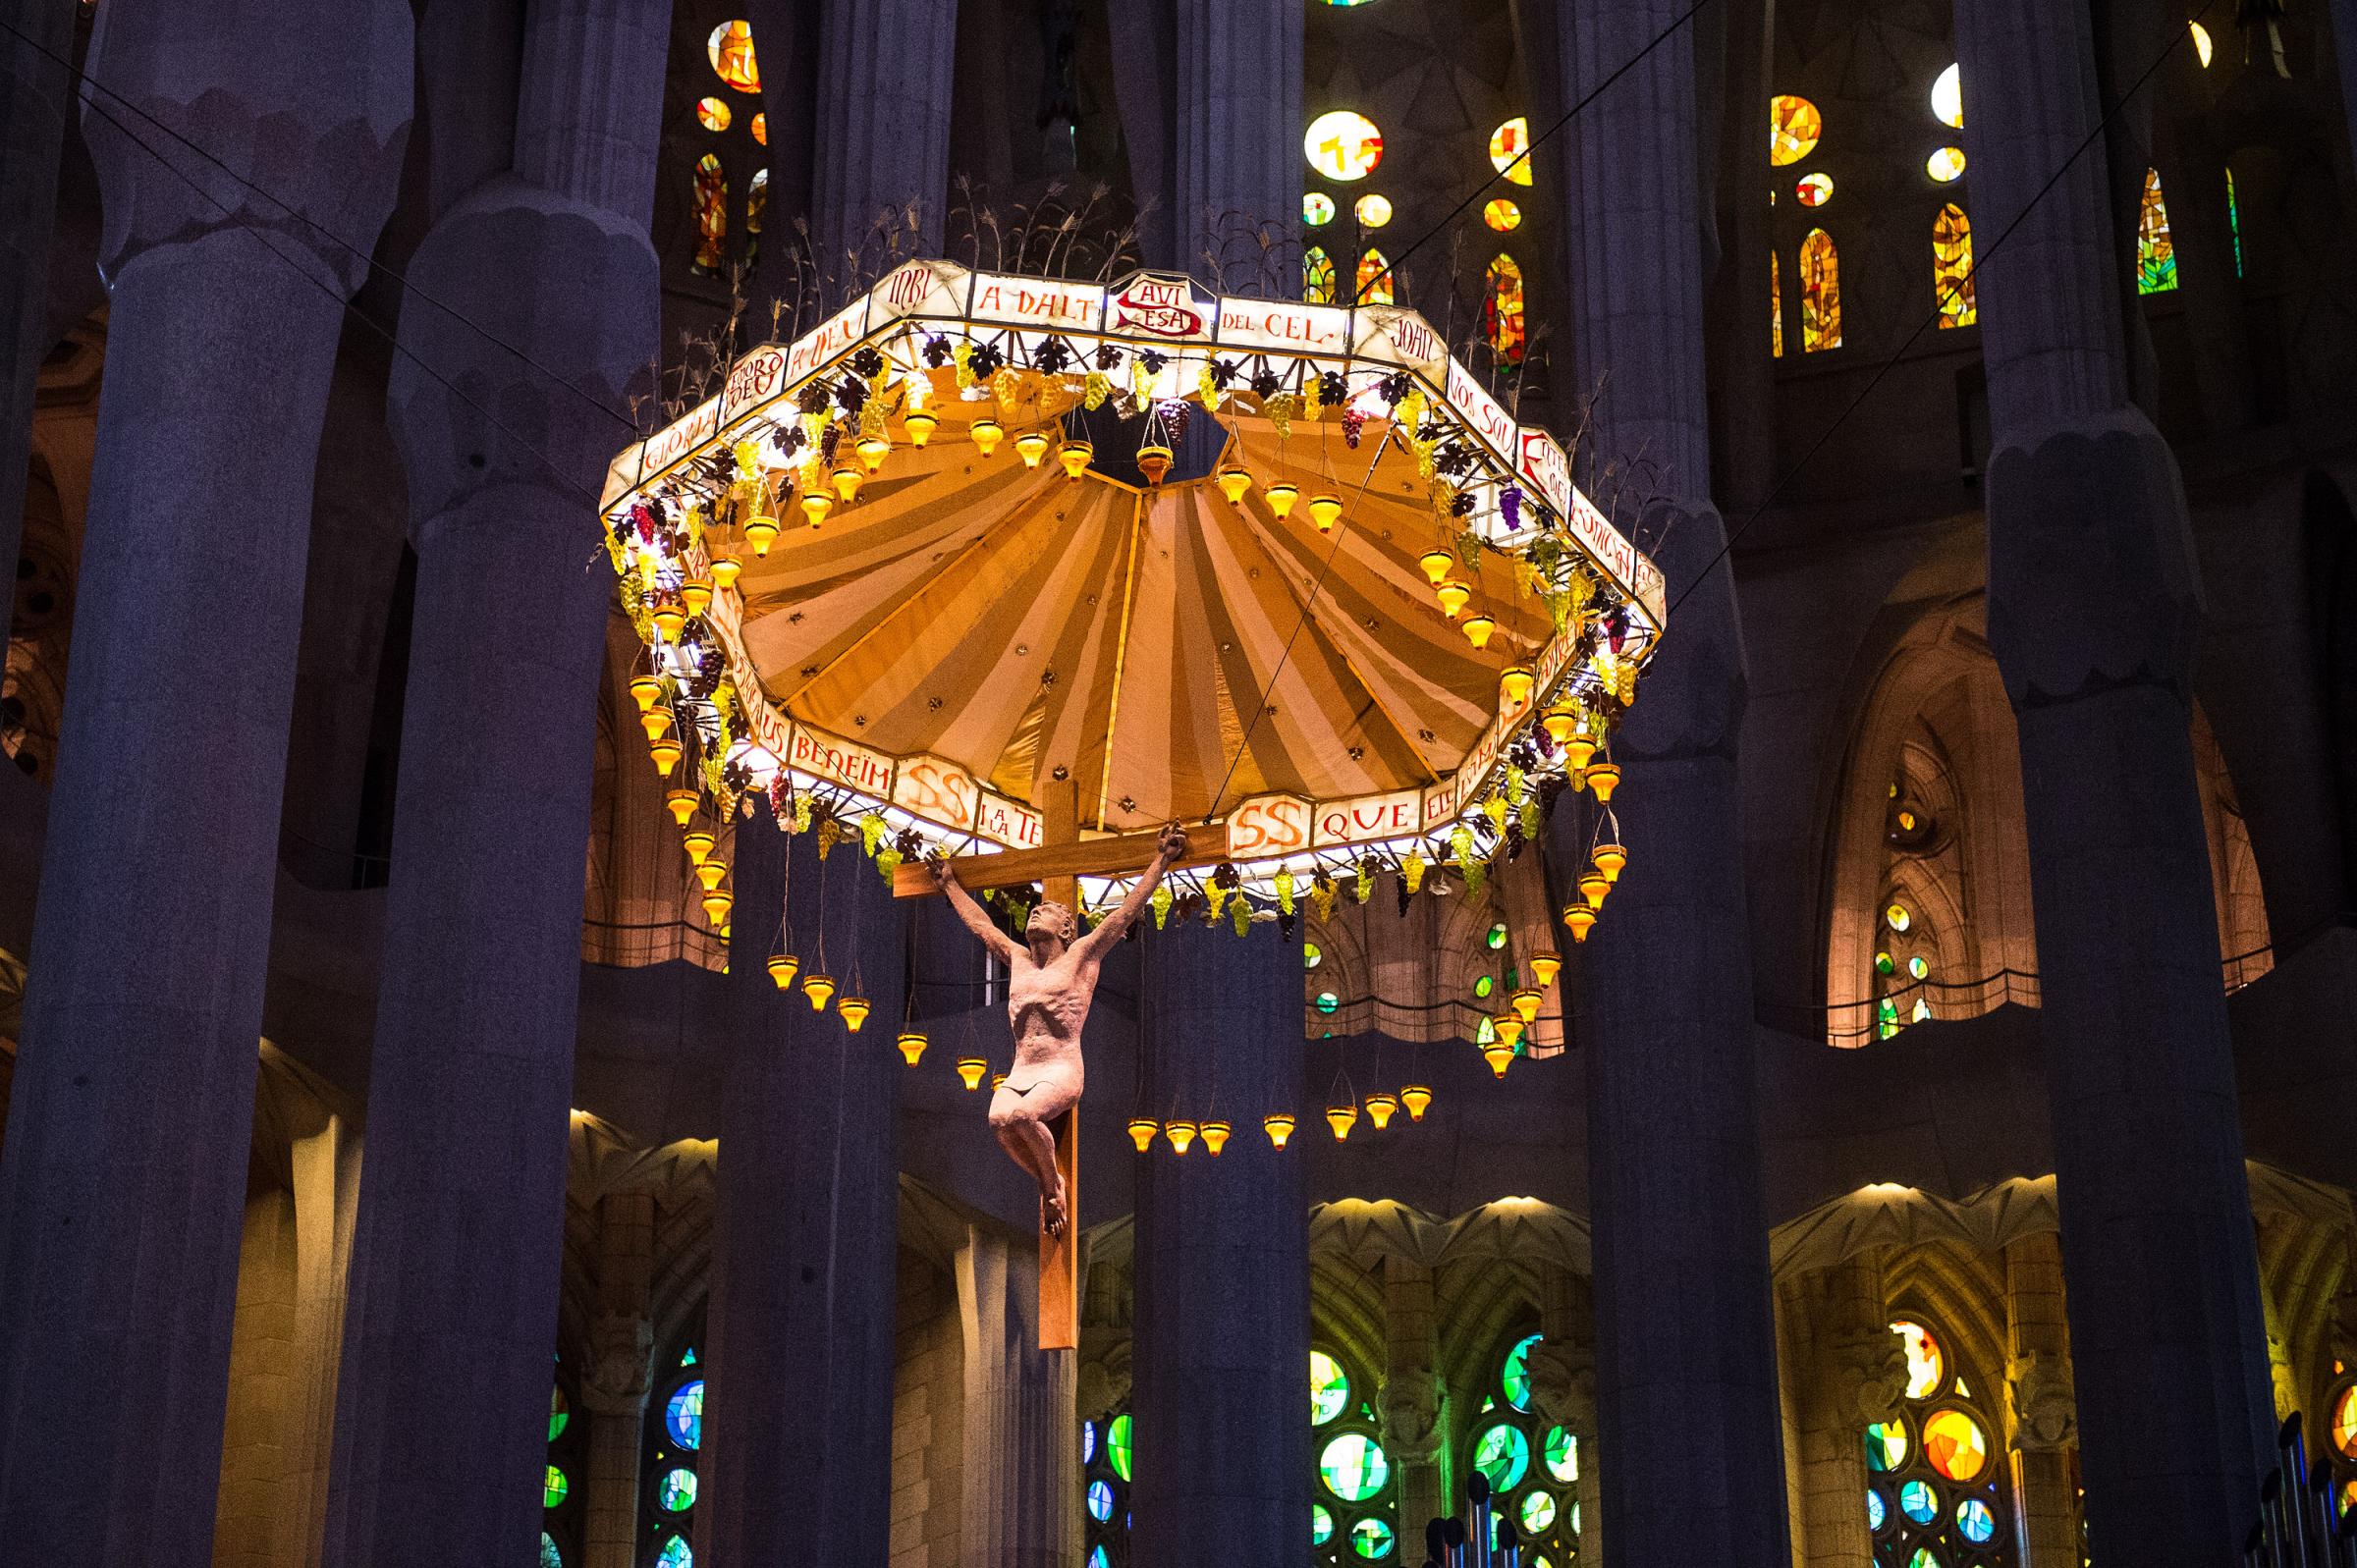 Sagrada Familia Enters Final Construction Phase